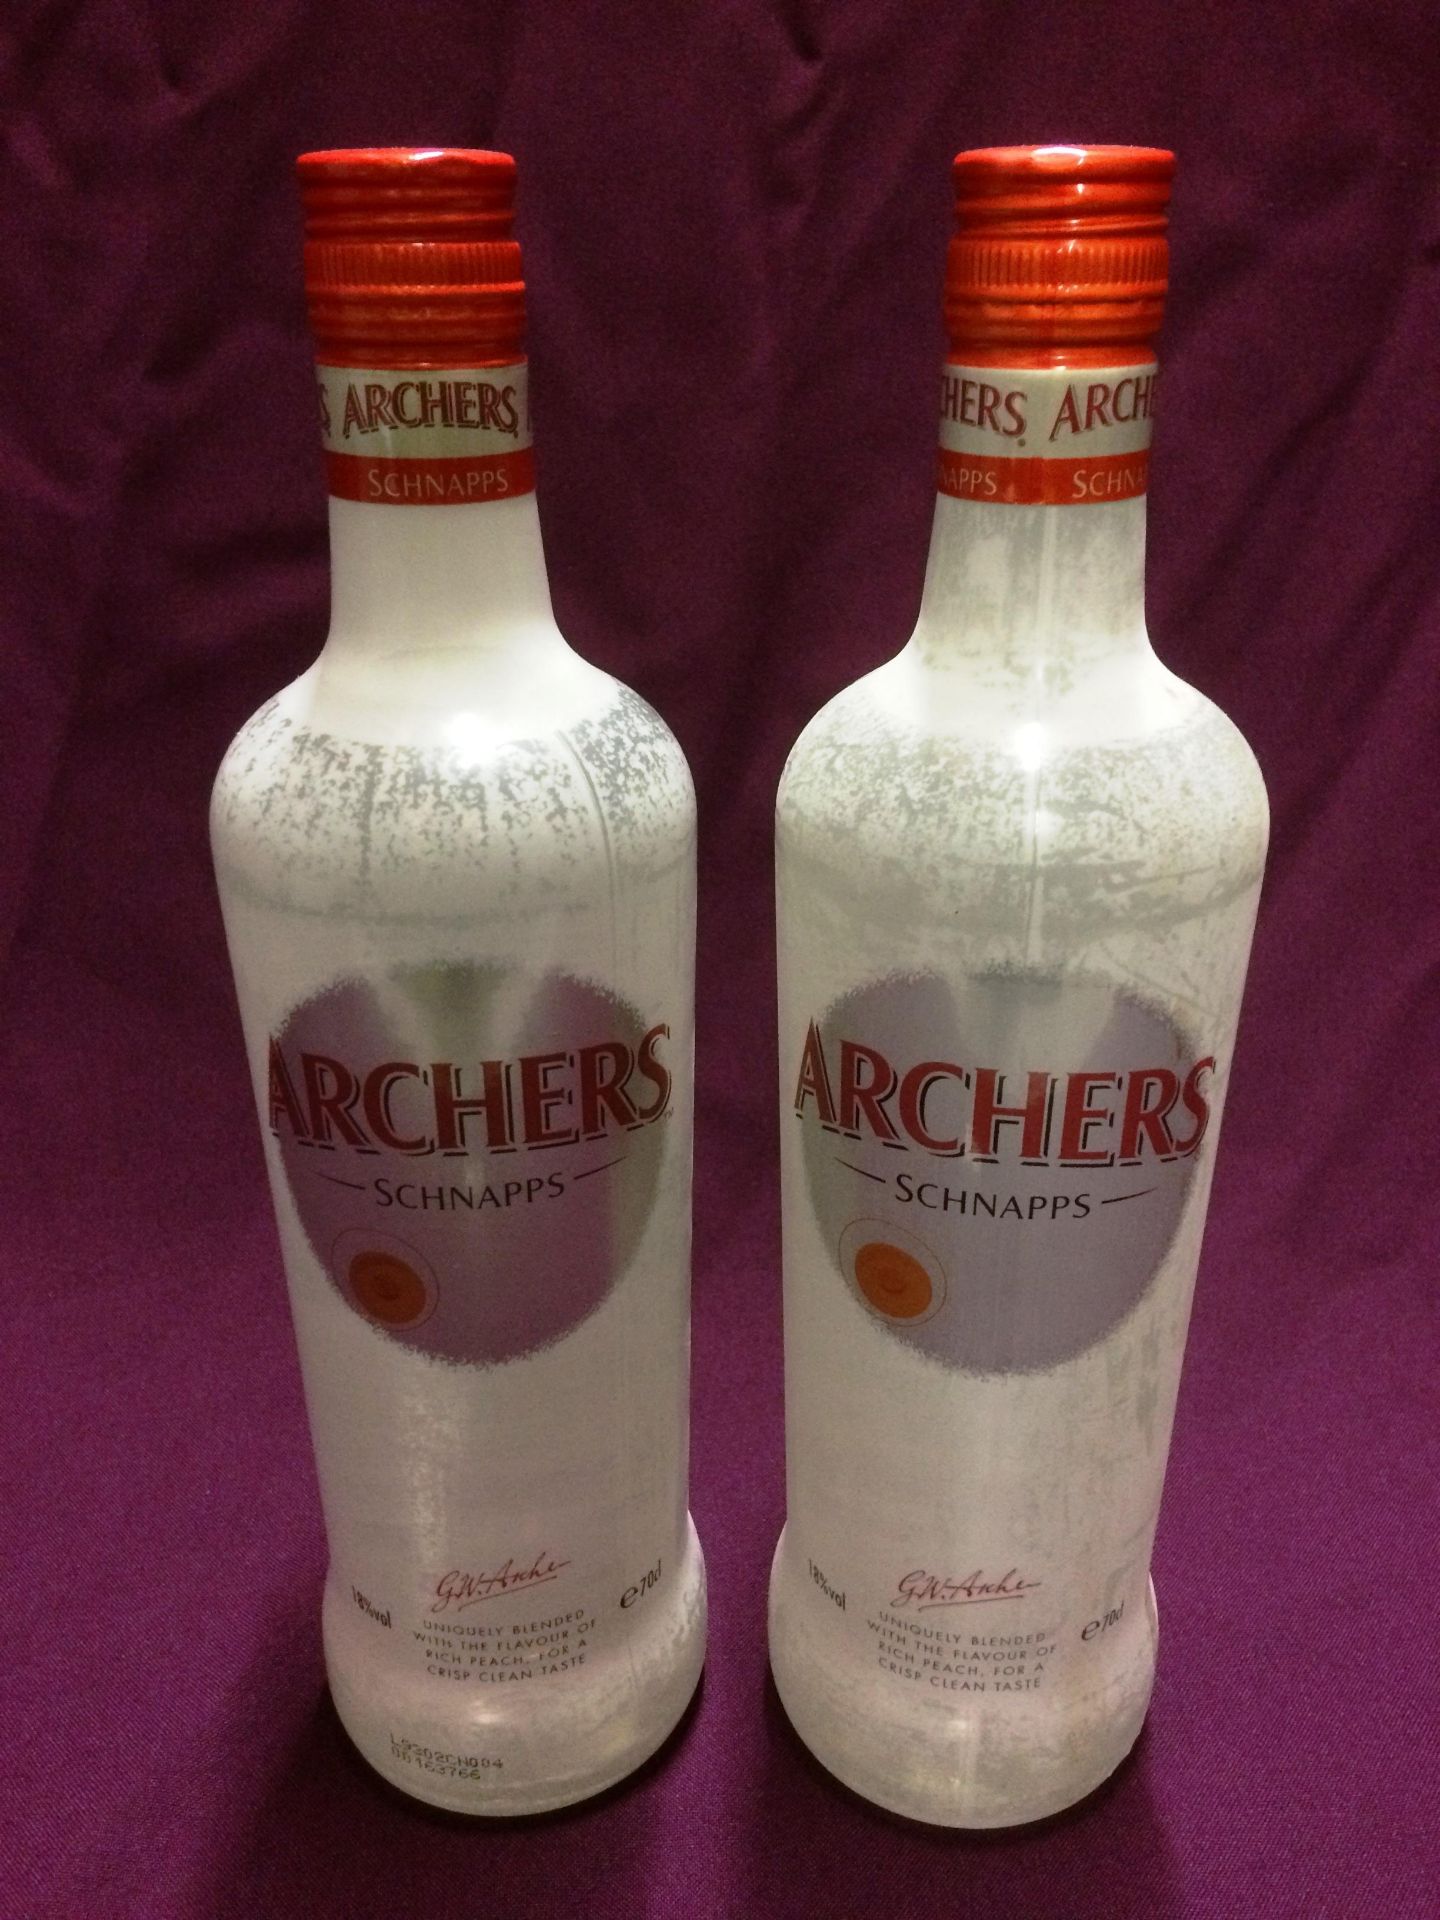 2 x 70cl bottles of Archers Schnapps